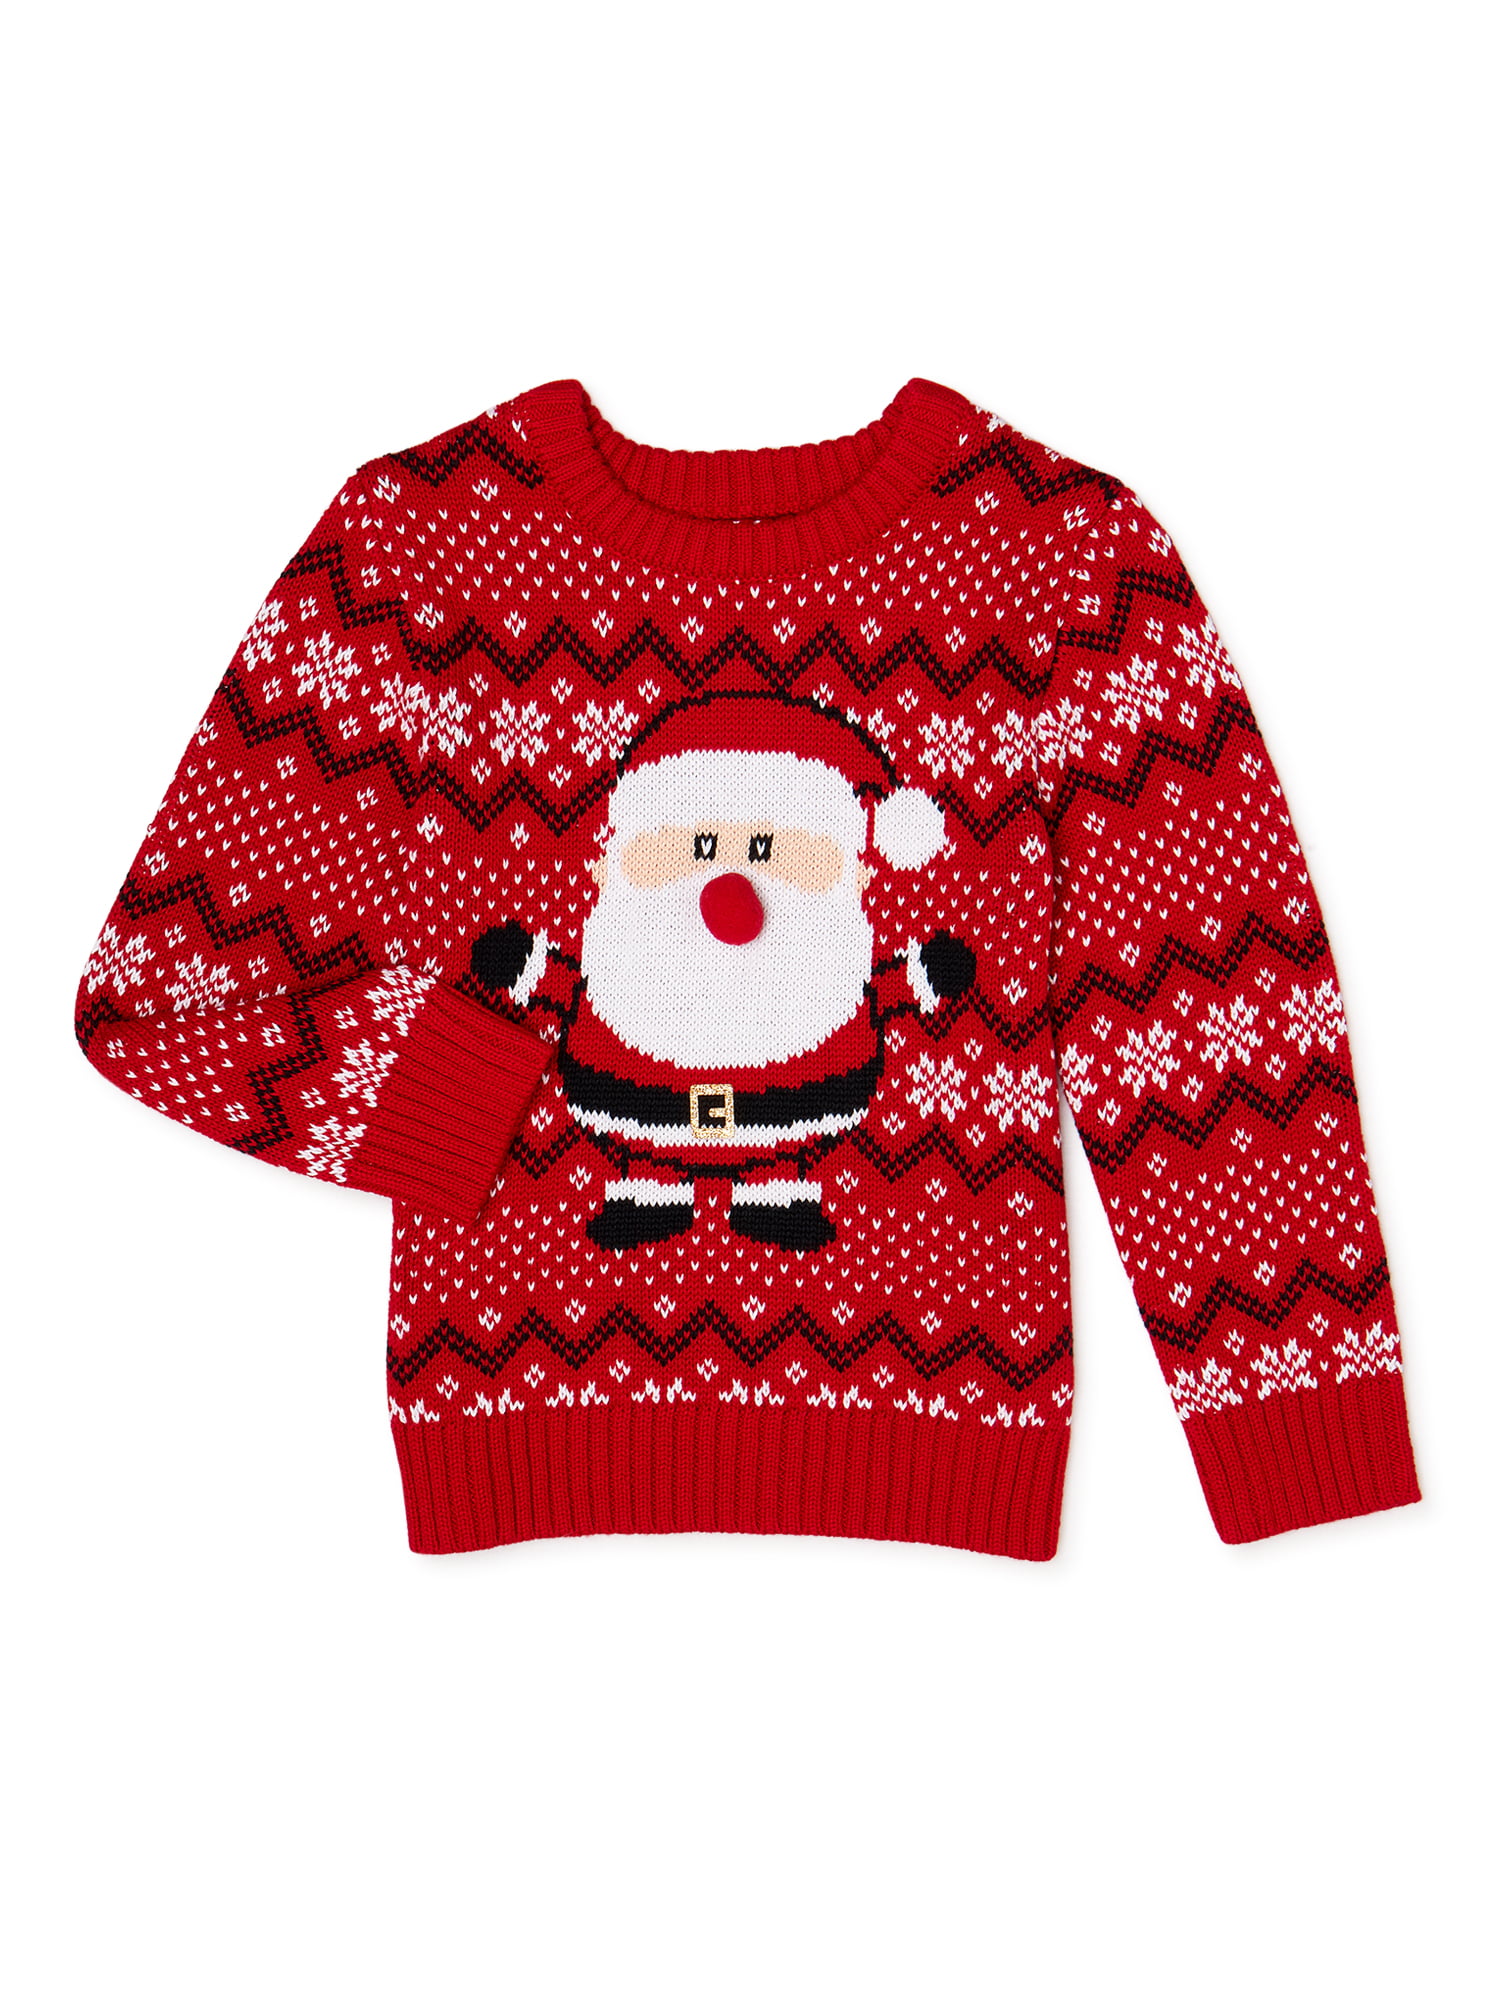 Kids Boys Novelty Funny Christmas Xmas Jumper Santa Claus Knit Sweater Blue Gift